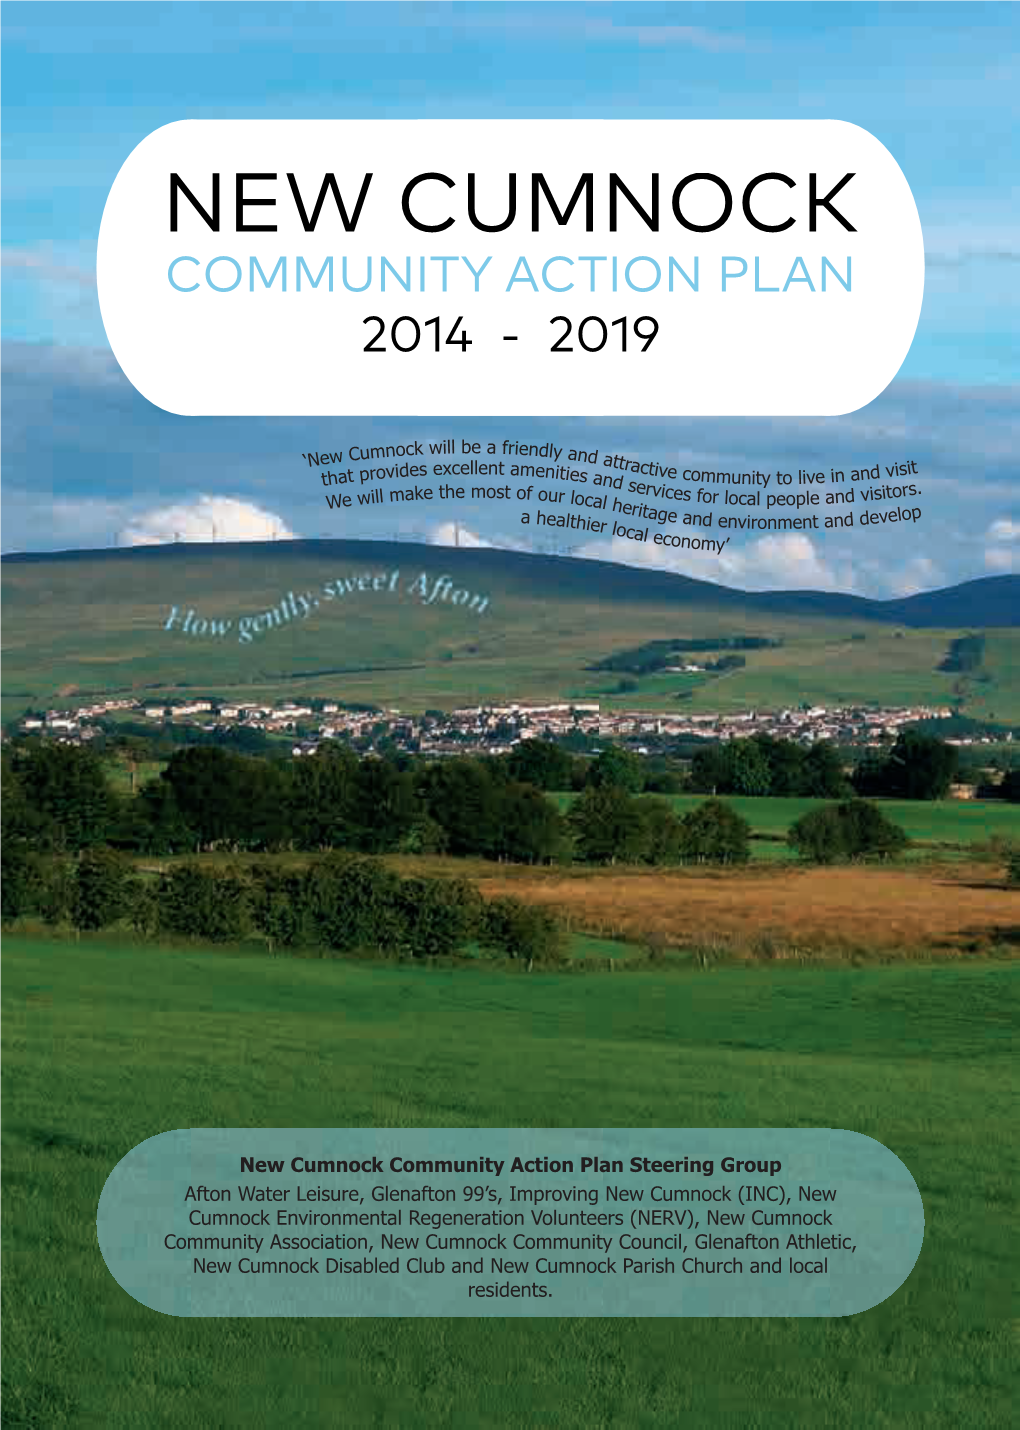 New Cumnock Community Action Plan 2014 - 2019